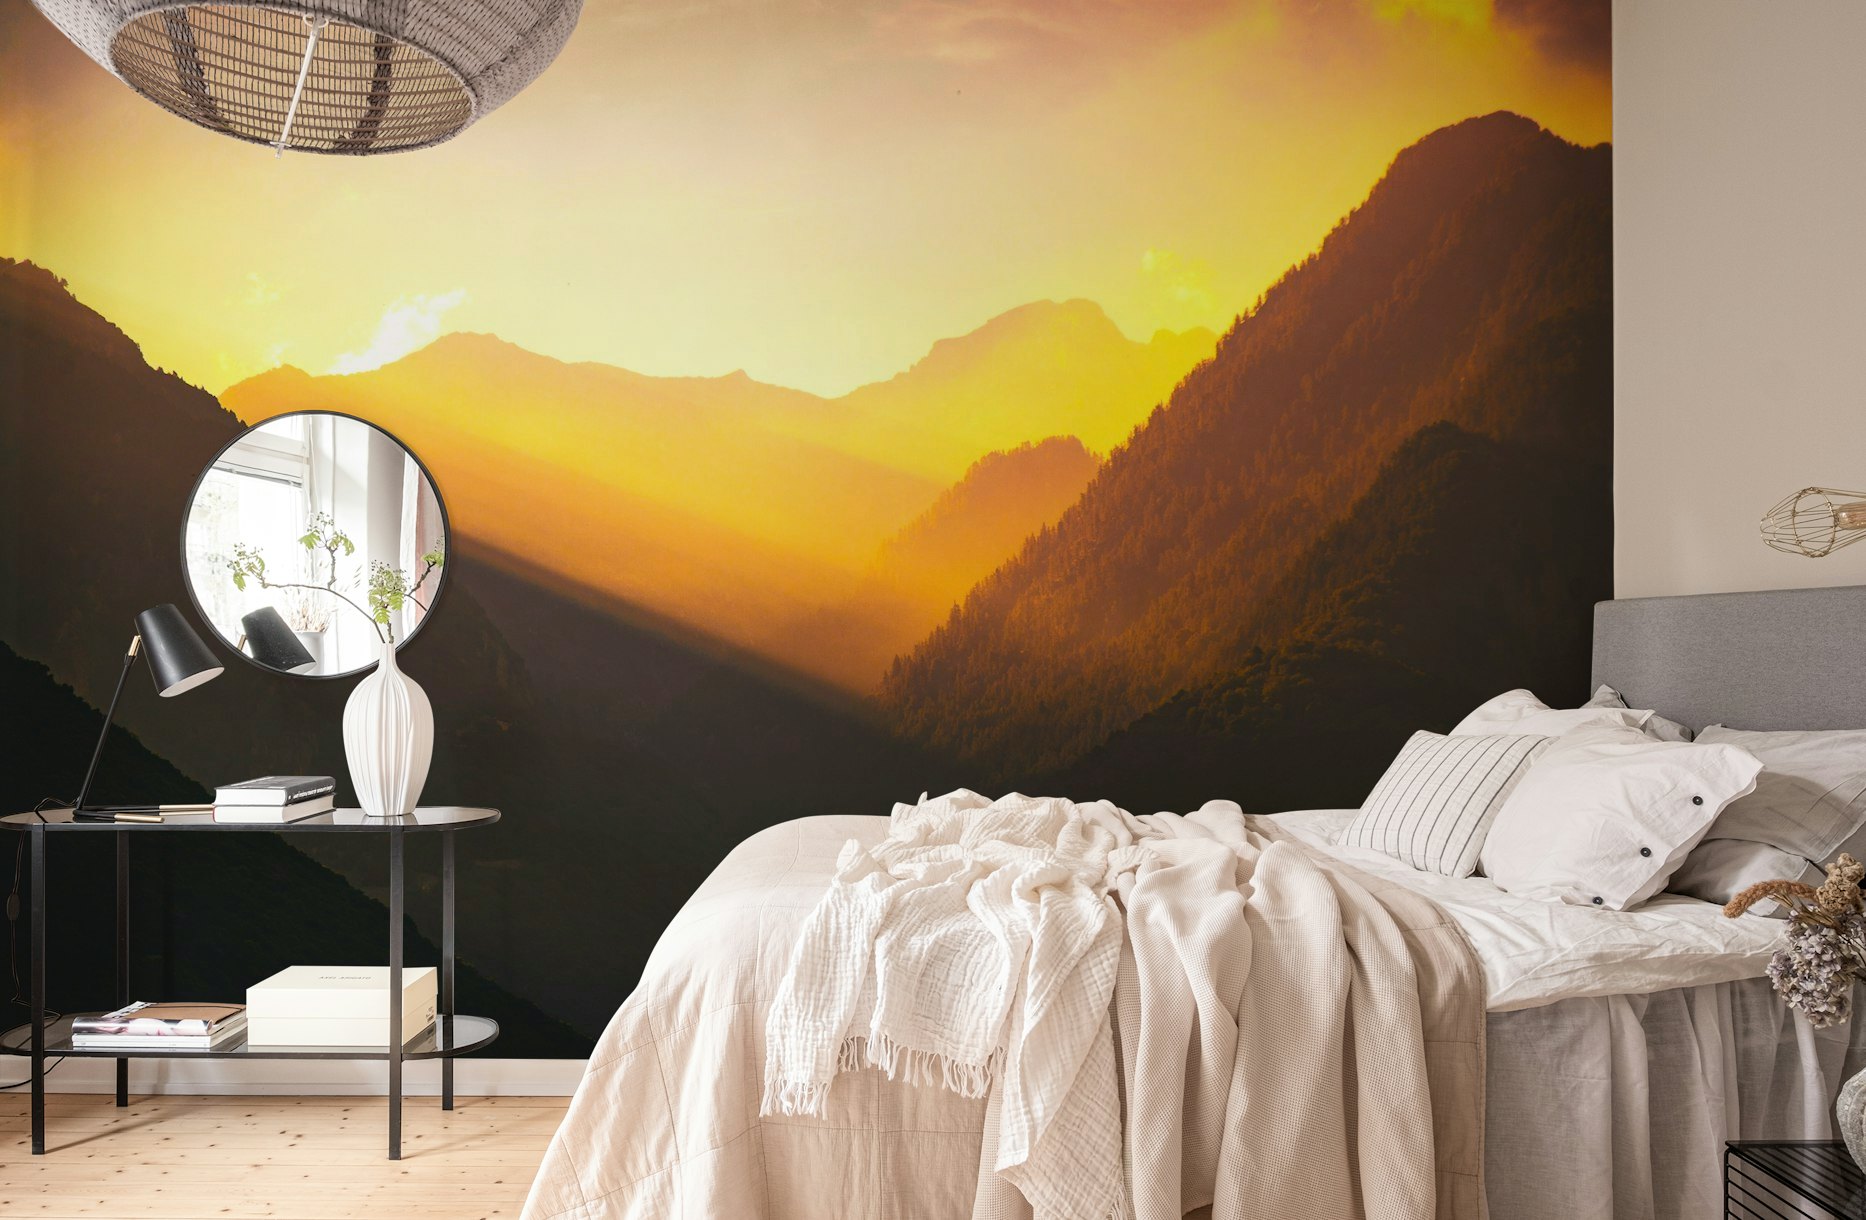 Sunset Mountains Forest wallpaper